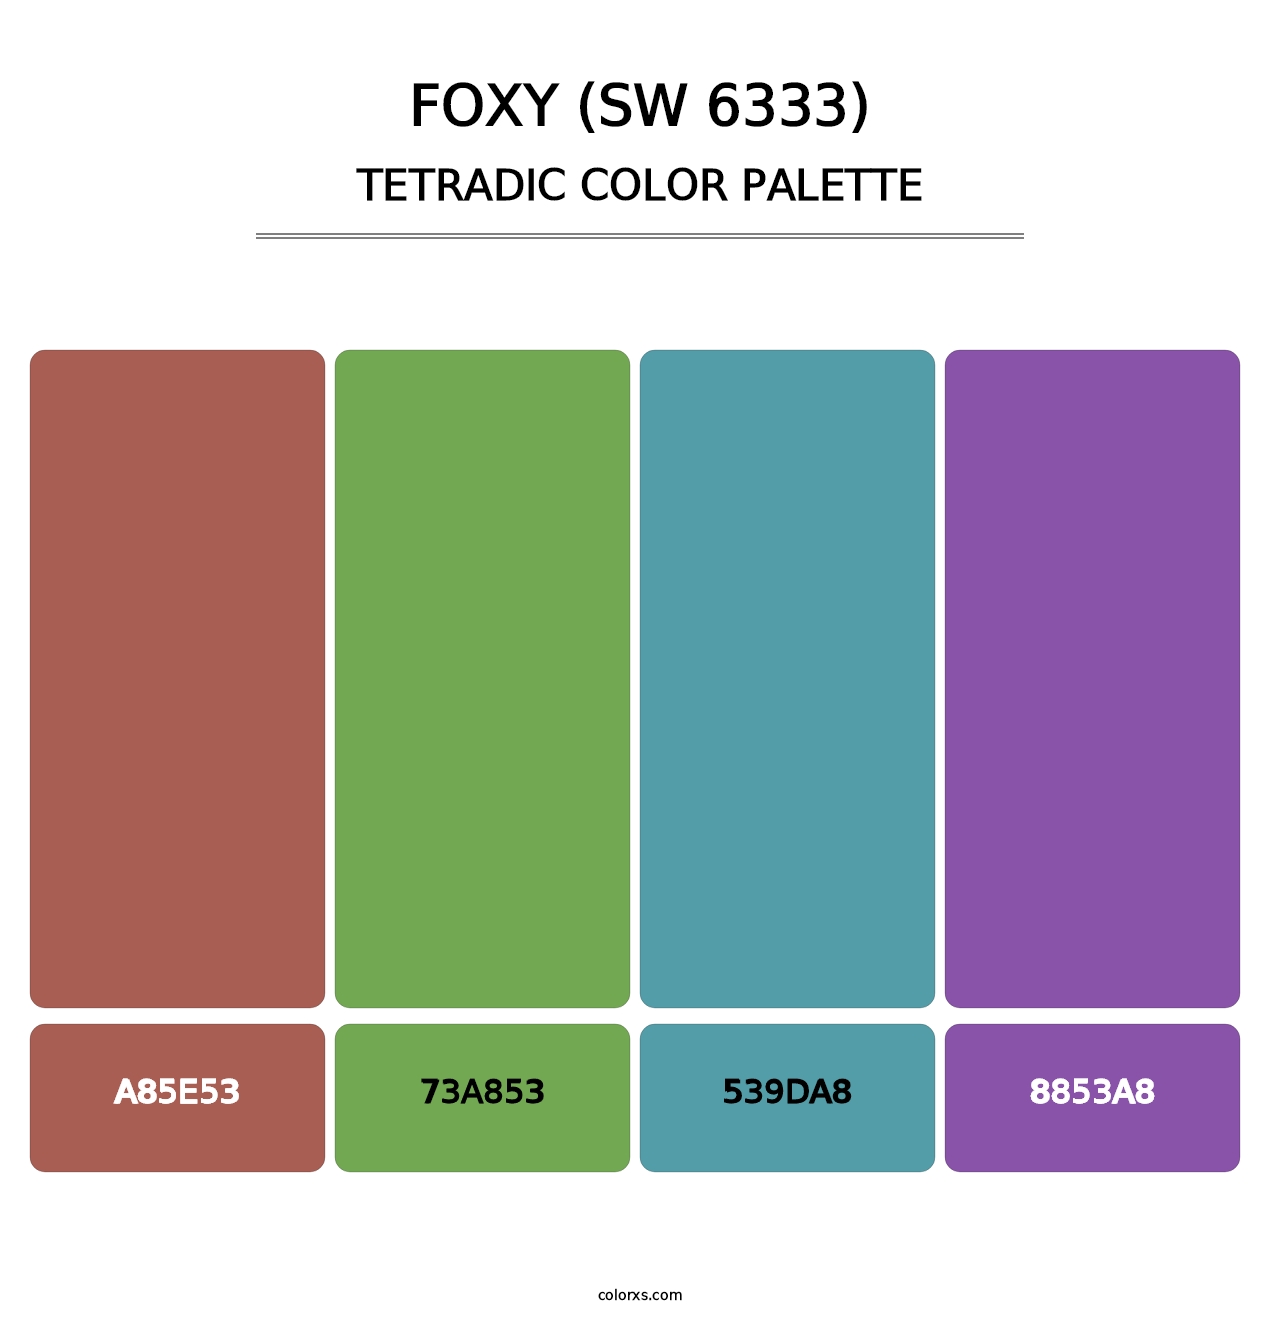 Foxy (SW 6333) - Tetradic Color Palette